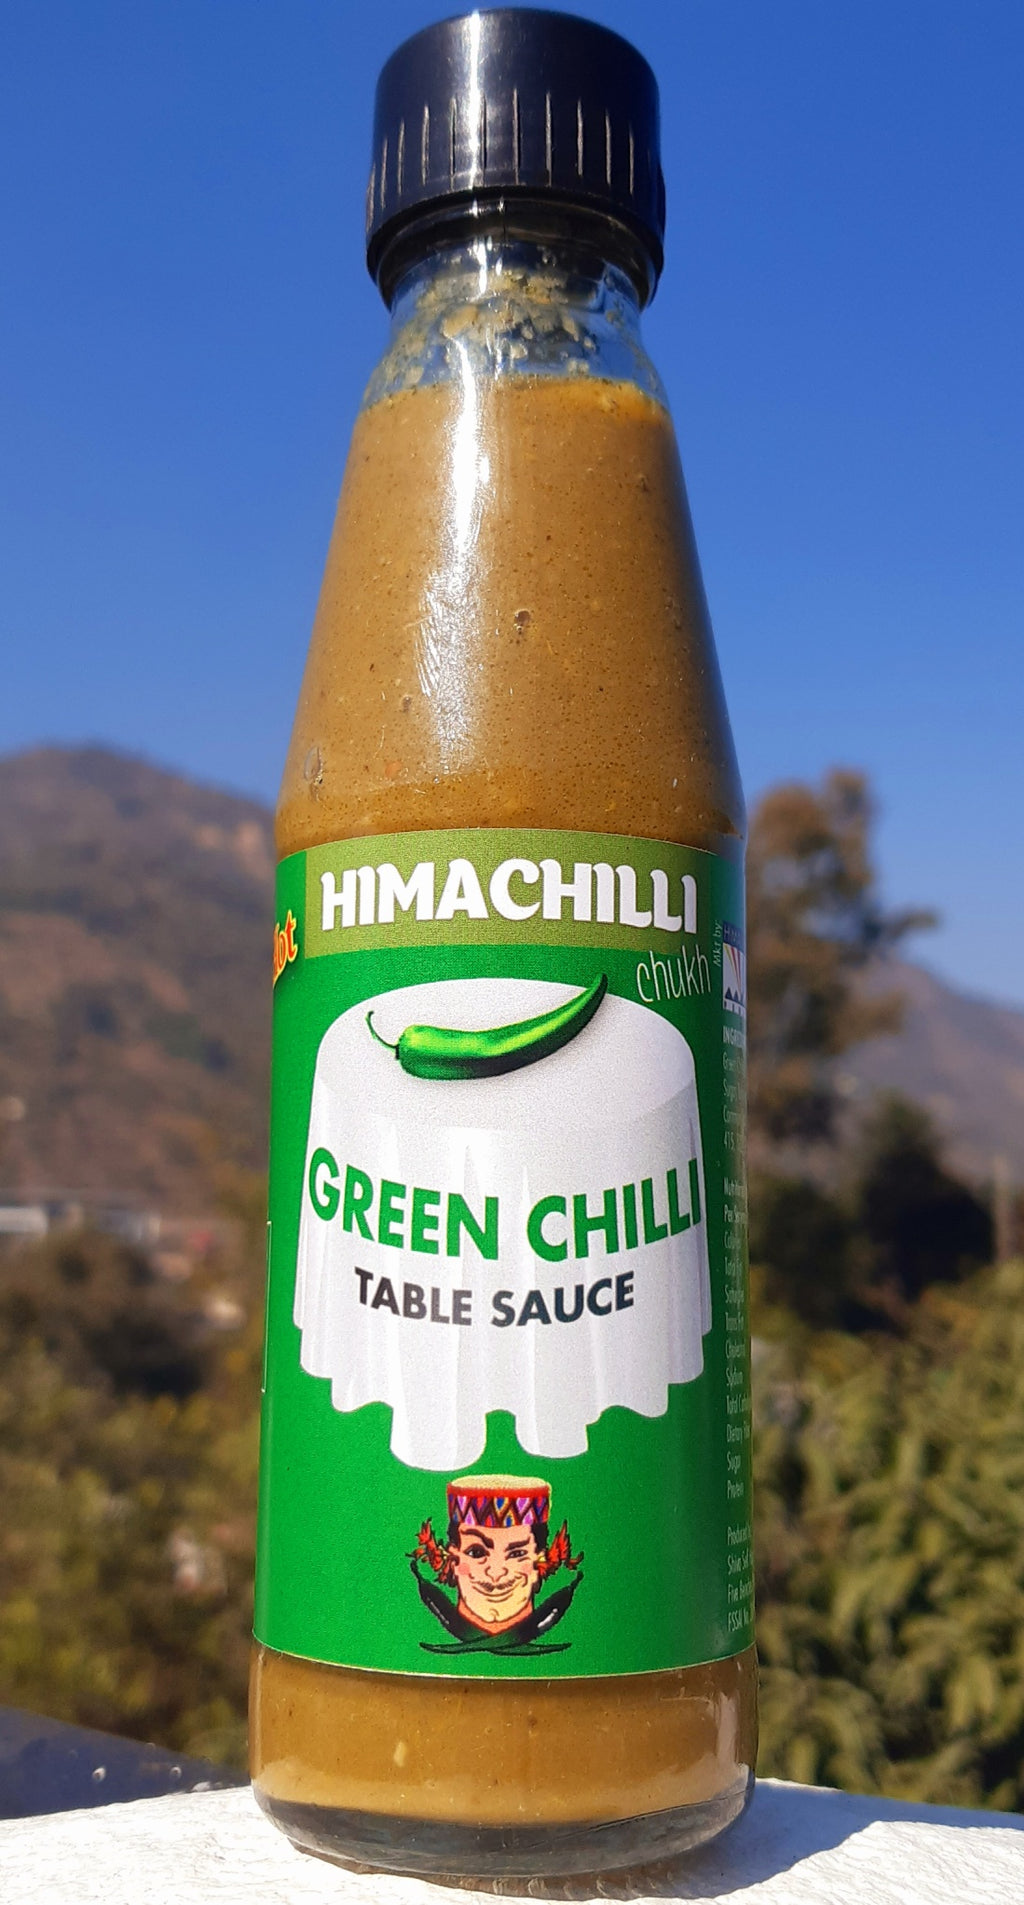 Green Chilli Sauce, Himachilli Sauce, Chinese Chilli Sauce, Momo Sauce, Green Chilli, Citrus chilli, Hot Sauce, Marinade